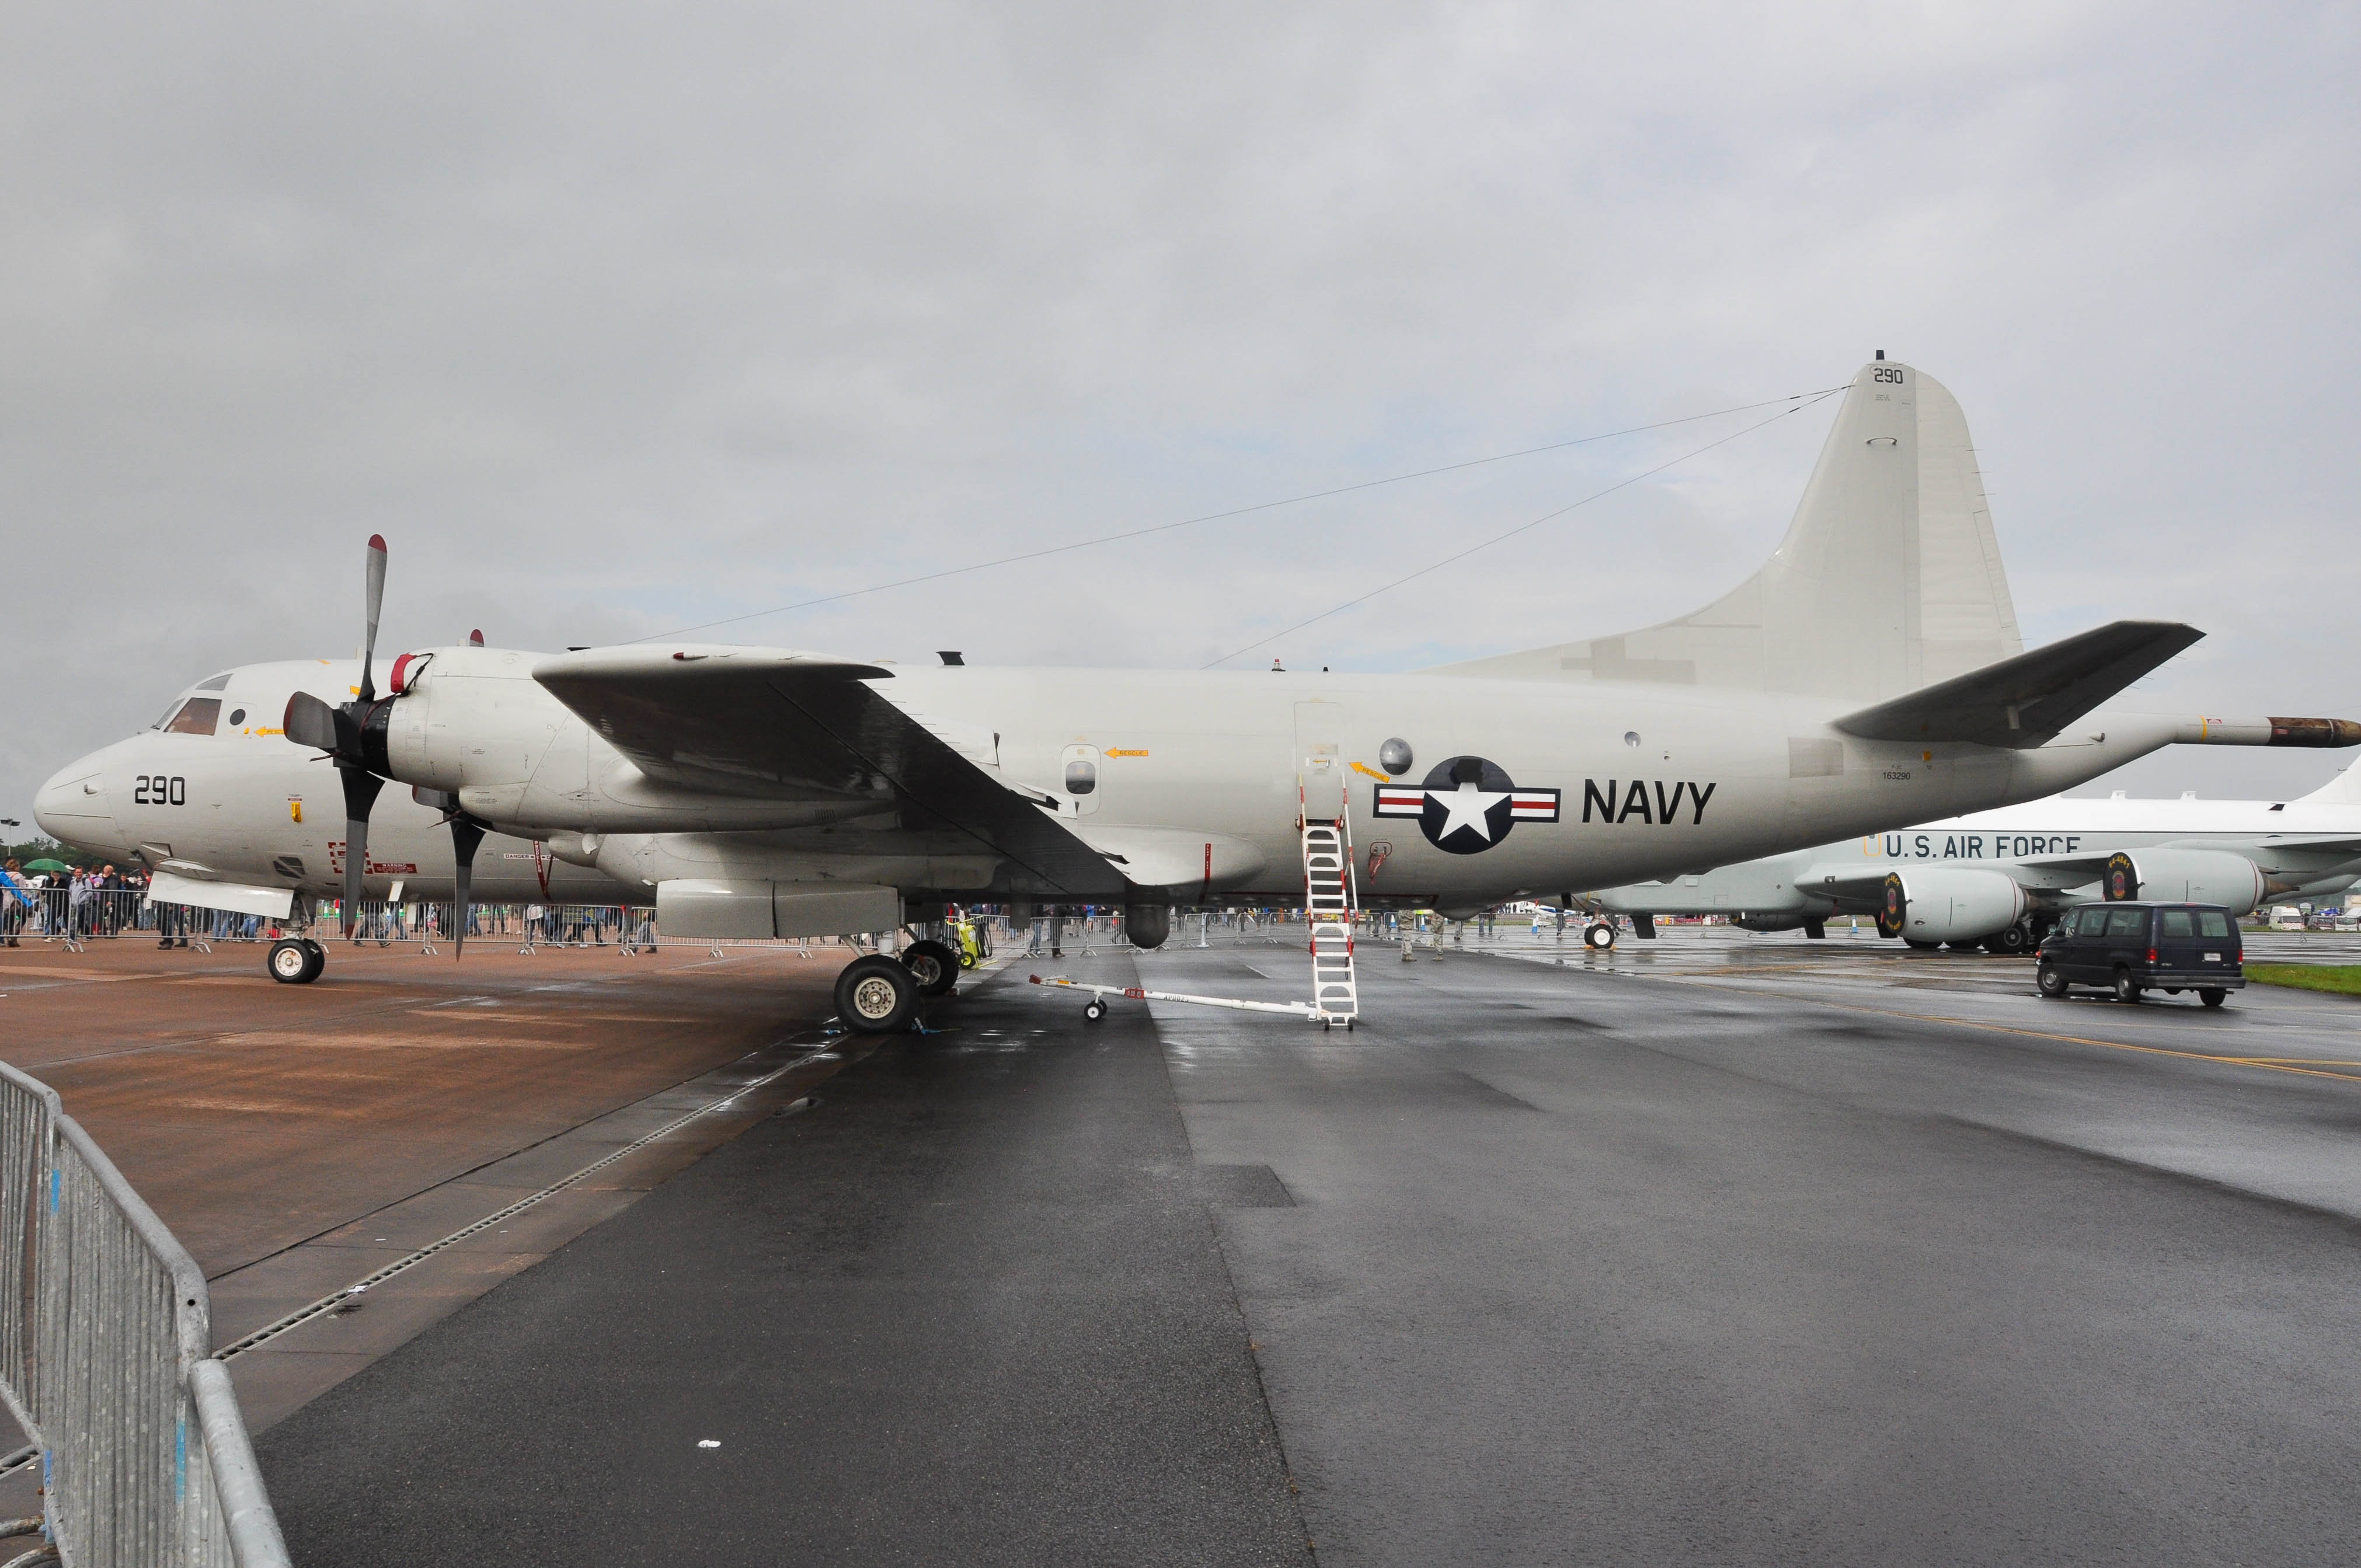 163290/163290 USN - United States Navy Lockheed P-3 Orion Airframe Information - AVSpotters.com